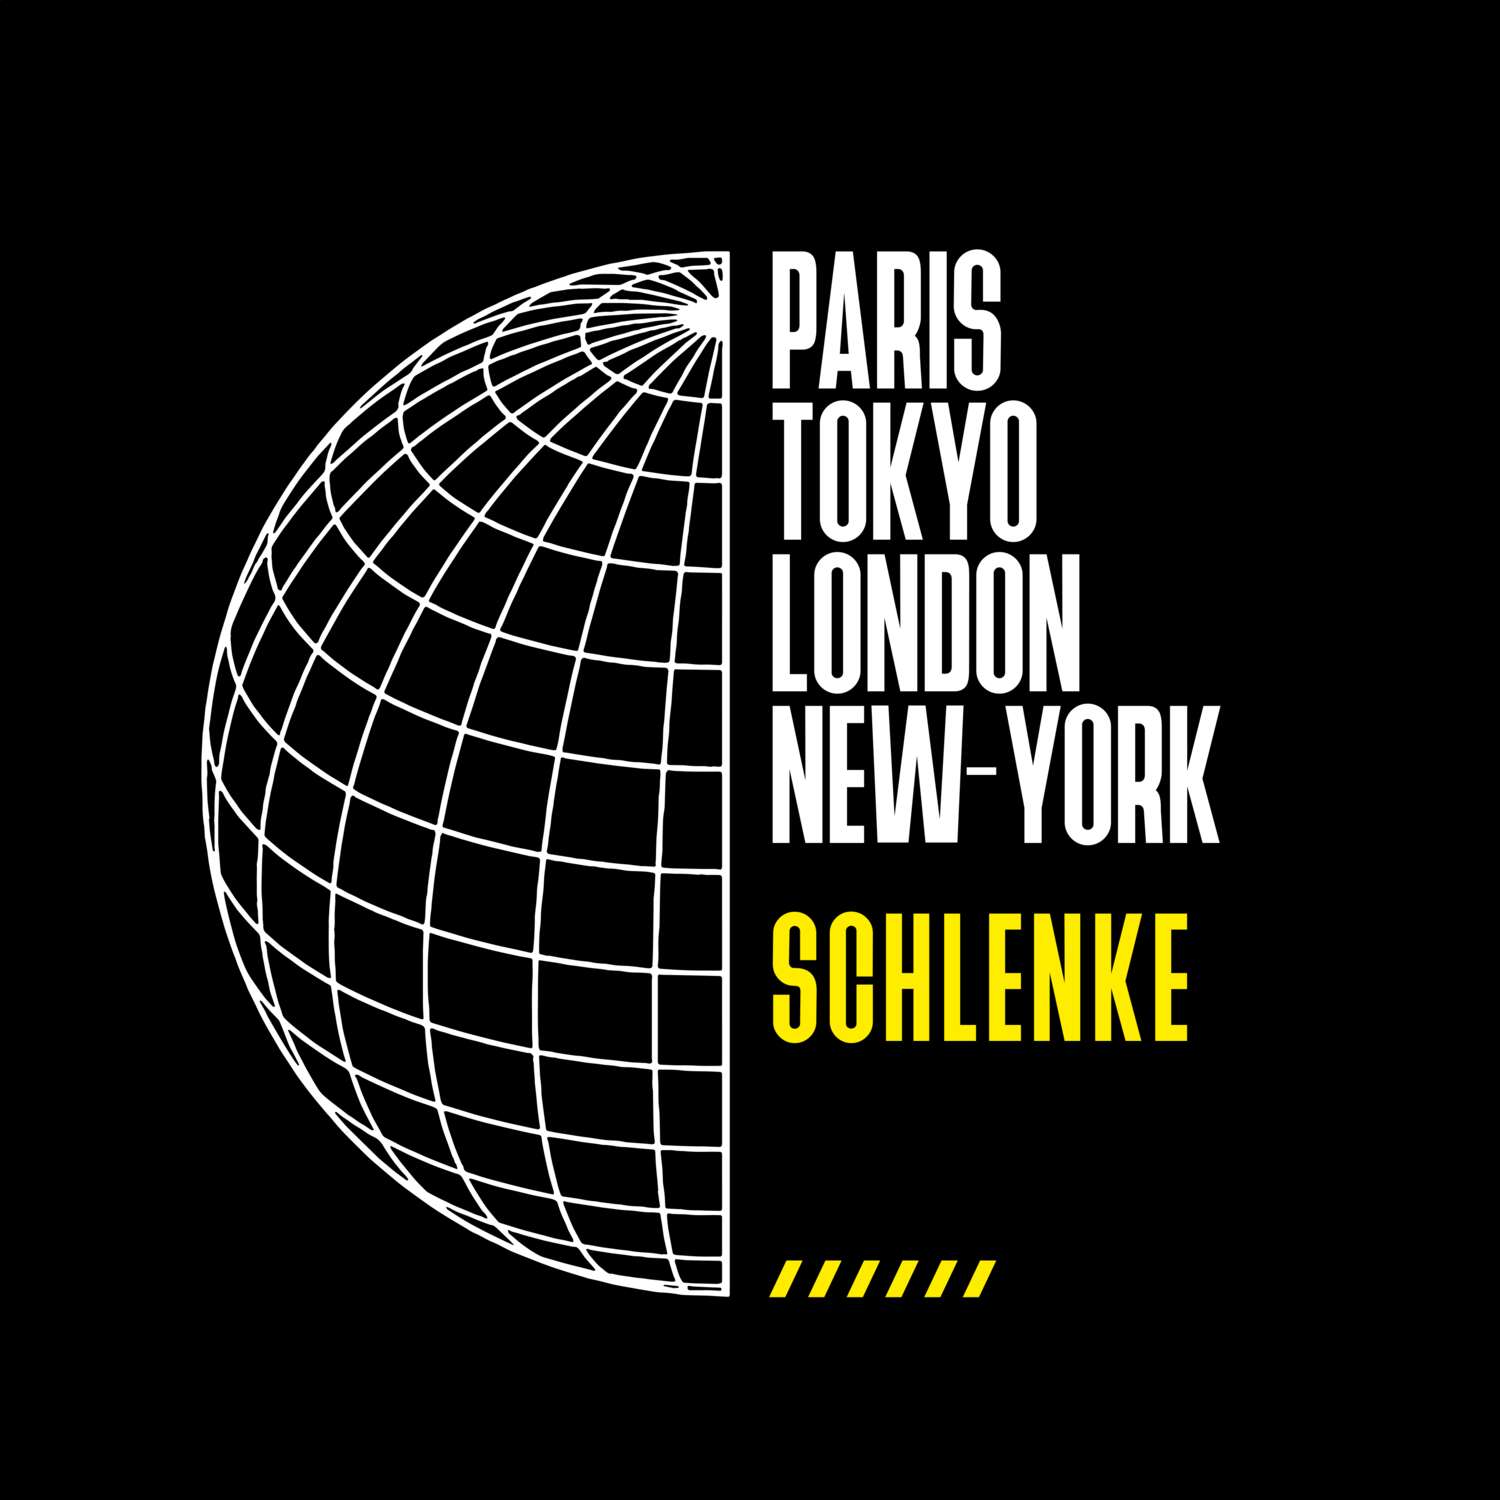 Schlenke T-Shirt »Paris Tokyo London«